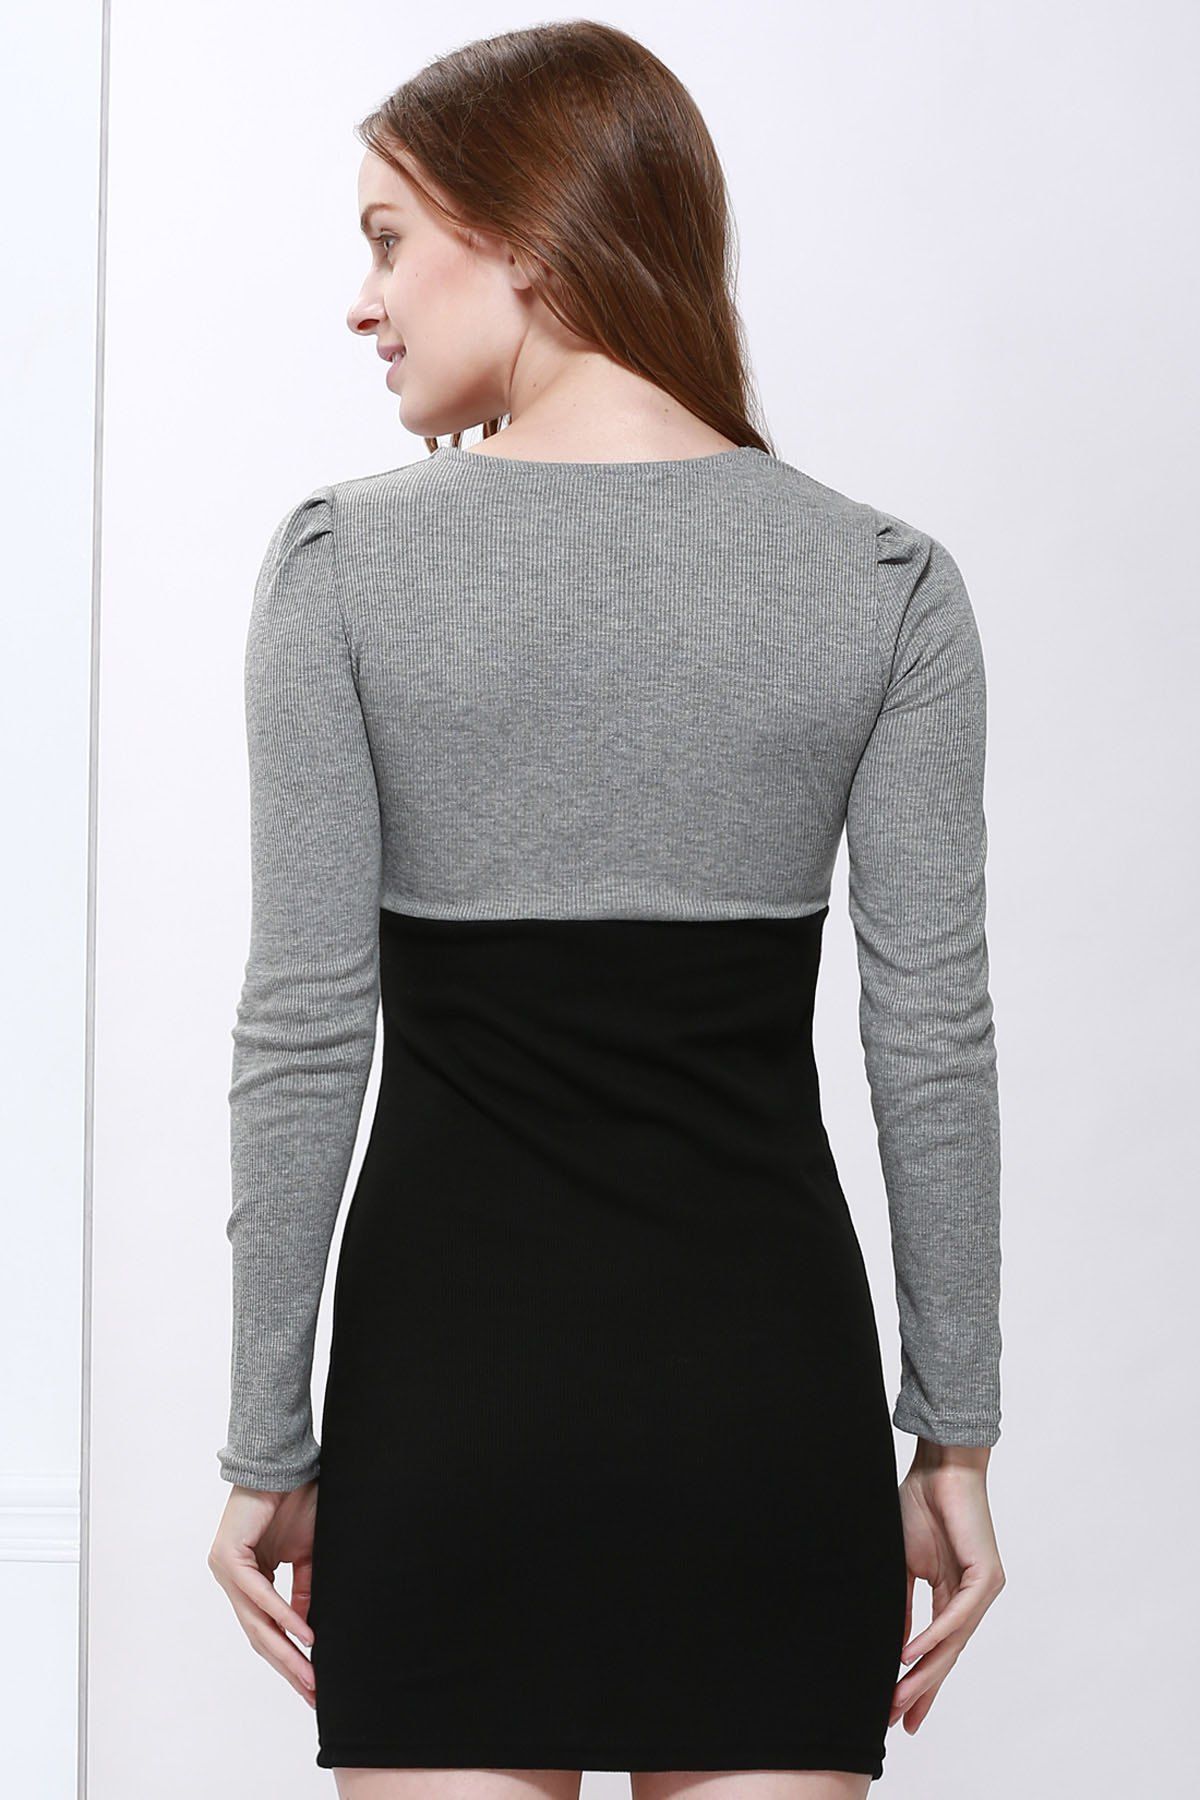 2018 Cotton Long Sleeve Two Tone Sheath Dress Black M In Long Sleeve Dresses Online Store Best